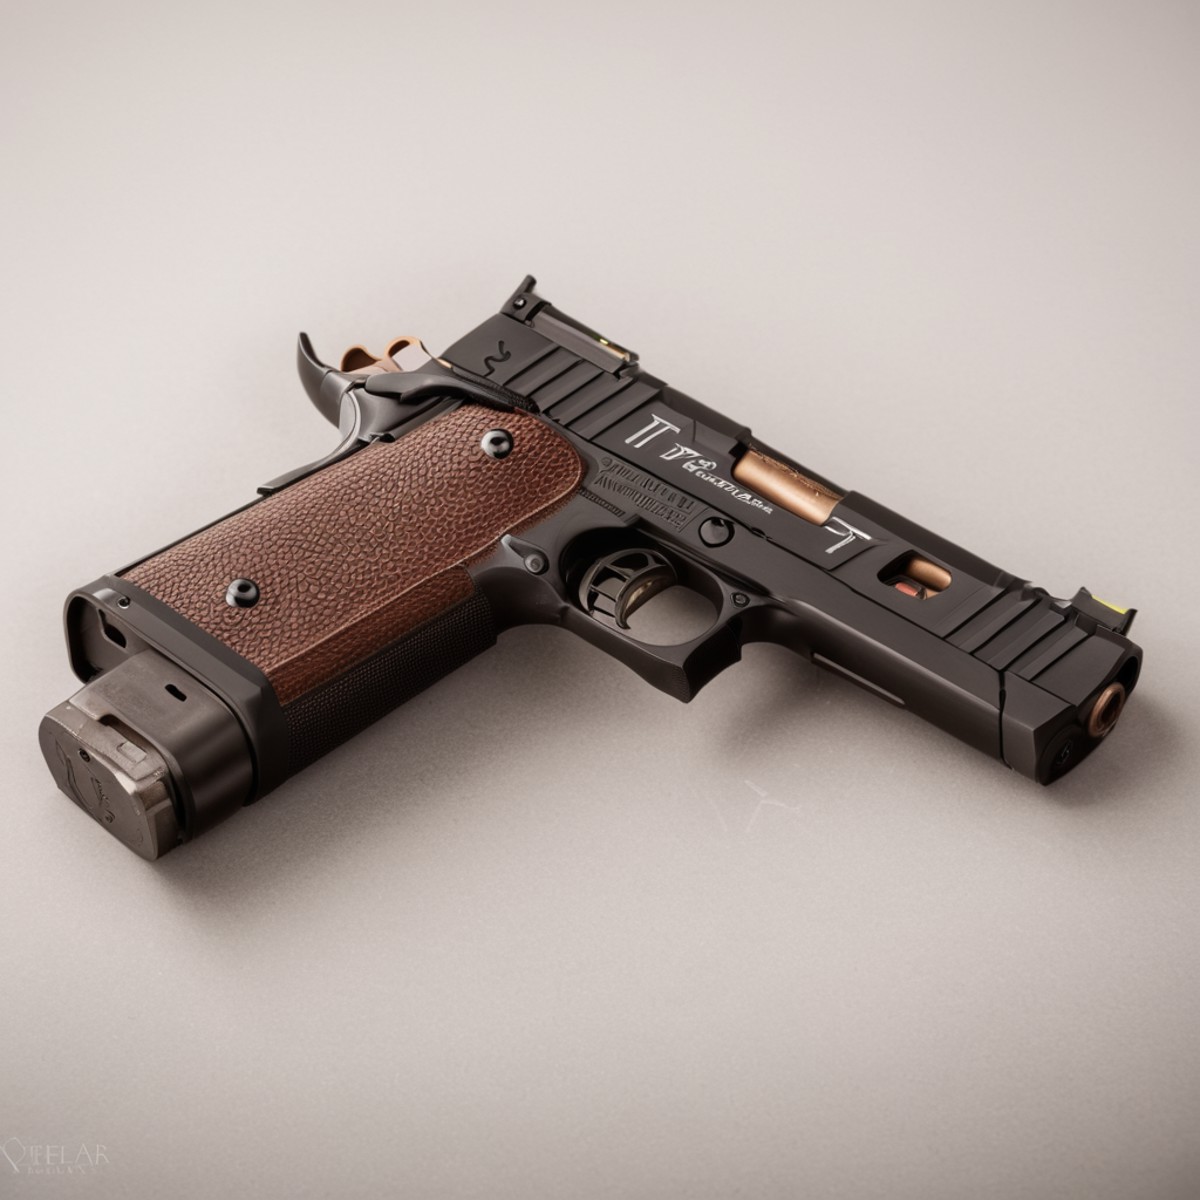 cinematic film still of  <lora:STI 1911:0.8>
STI 1911 pistol hand gun weapon, a black gun with a brown barrel on a white b...